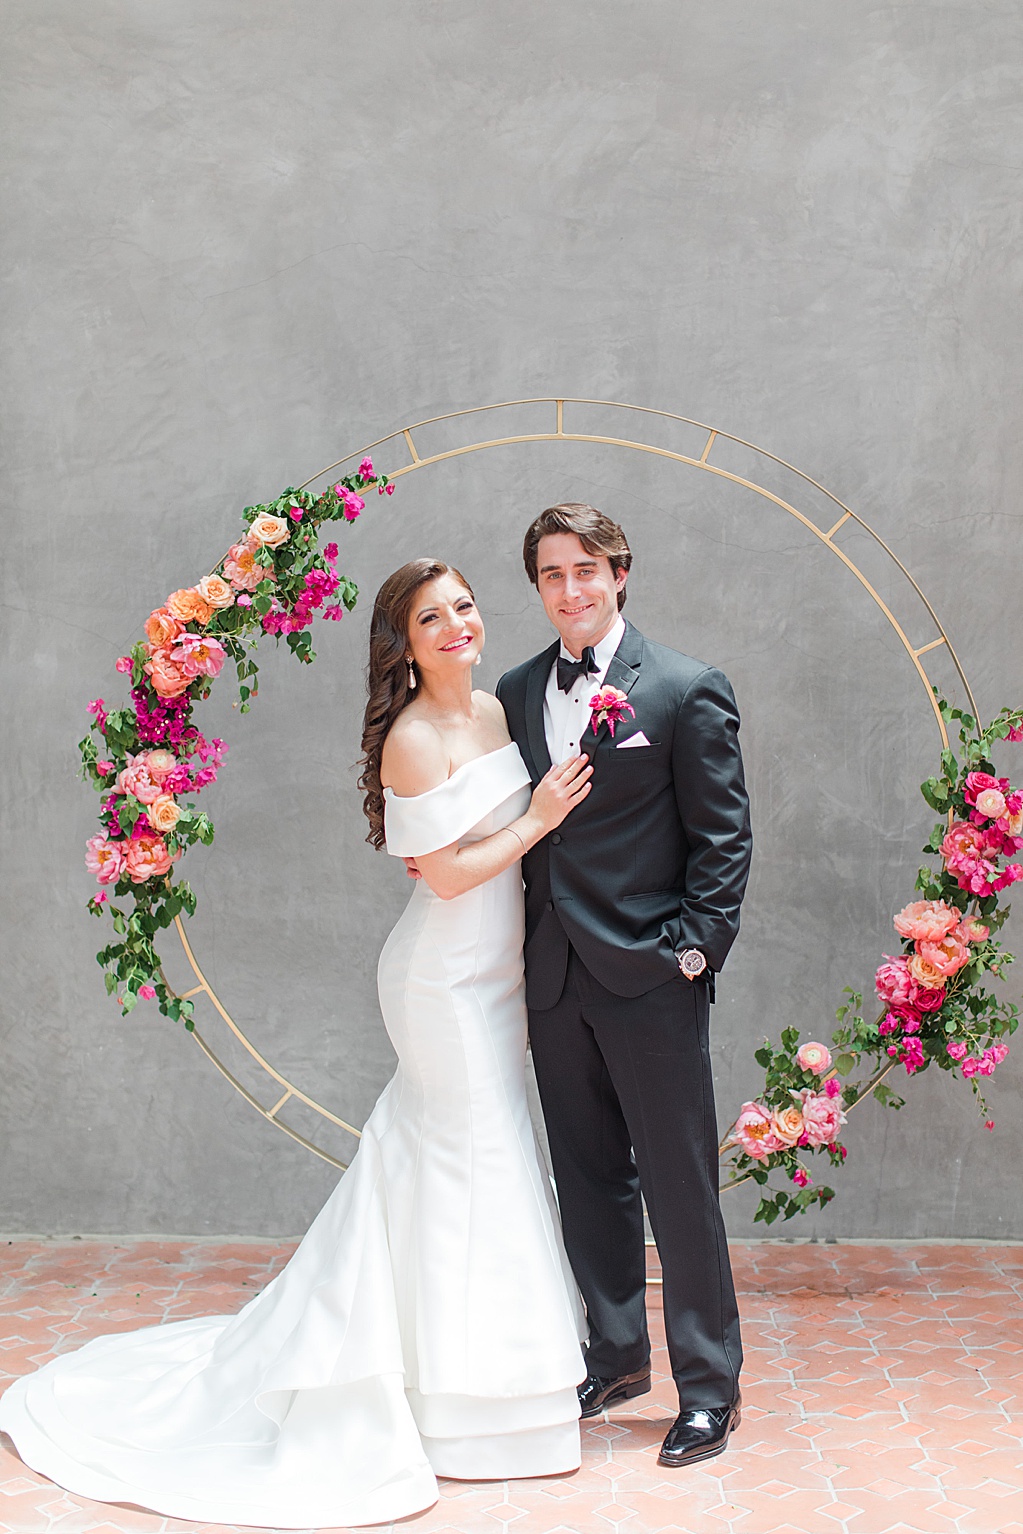 A Summer Wedding at Hotel Emma in San Antonio featuring hot pink bougainvillea florals 0050